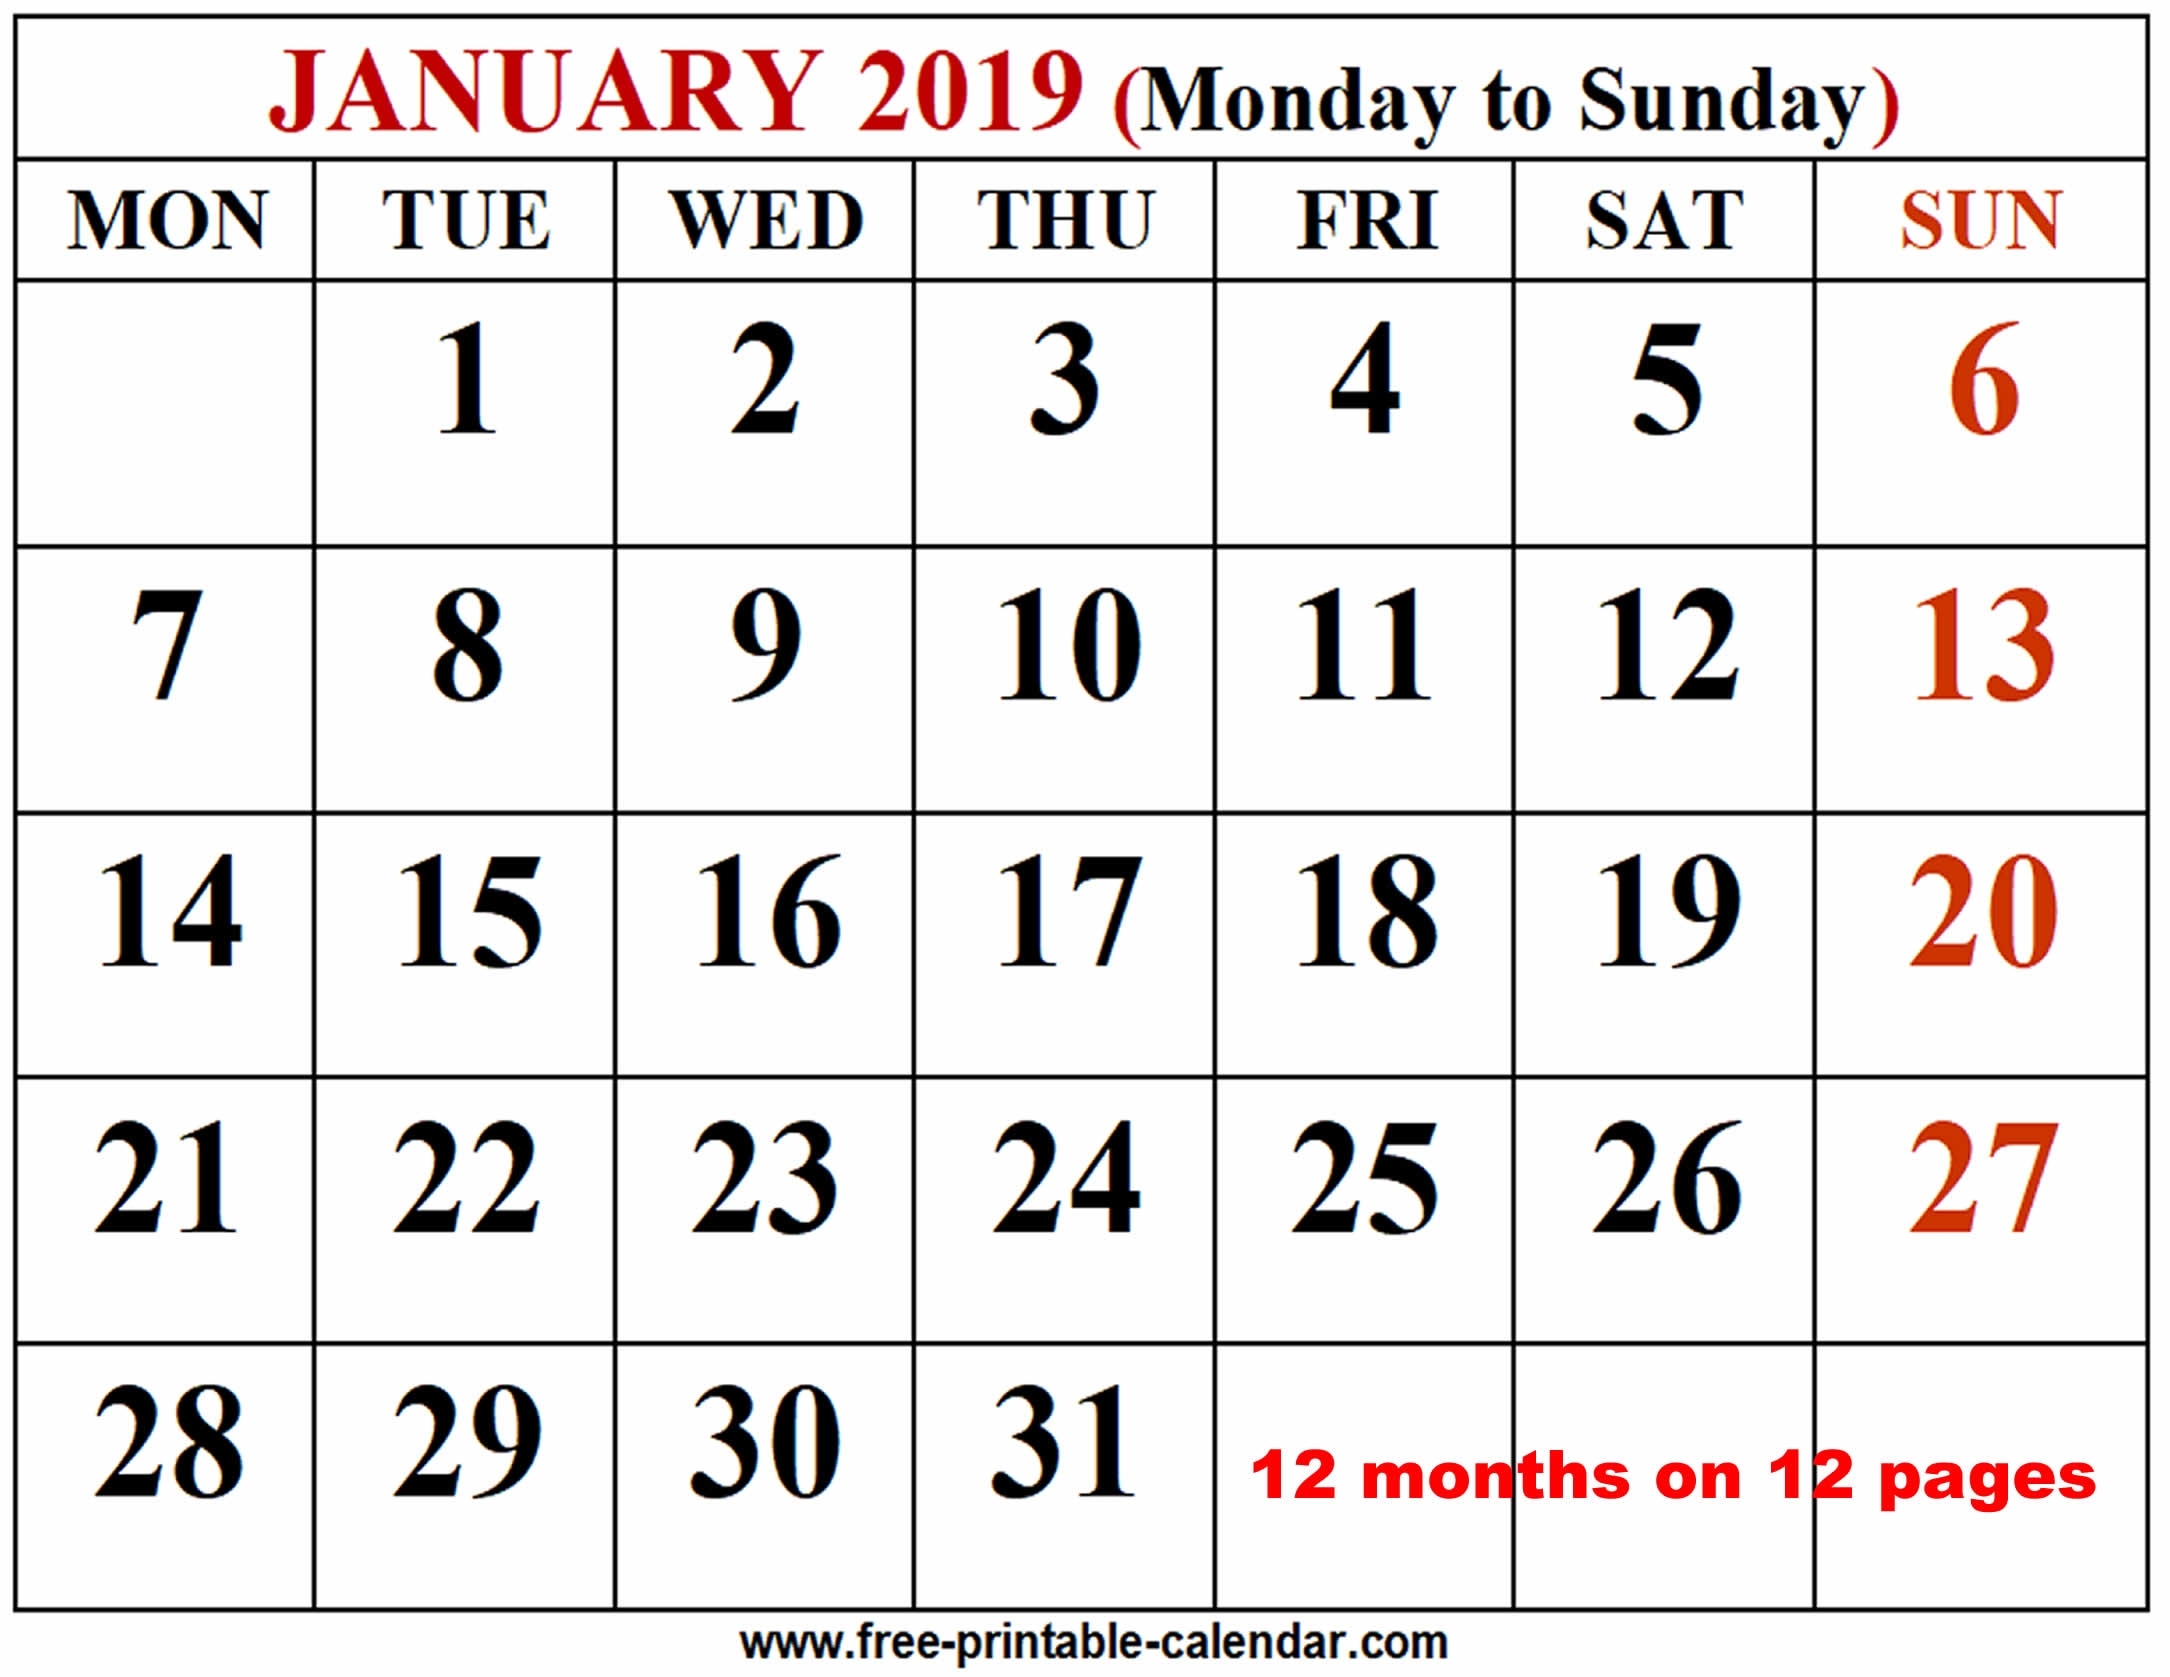 2019 Calendar Template - Free-Printable-Calendar